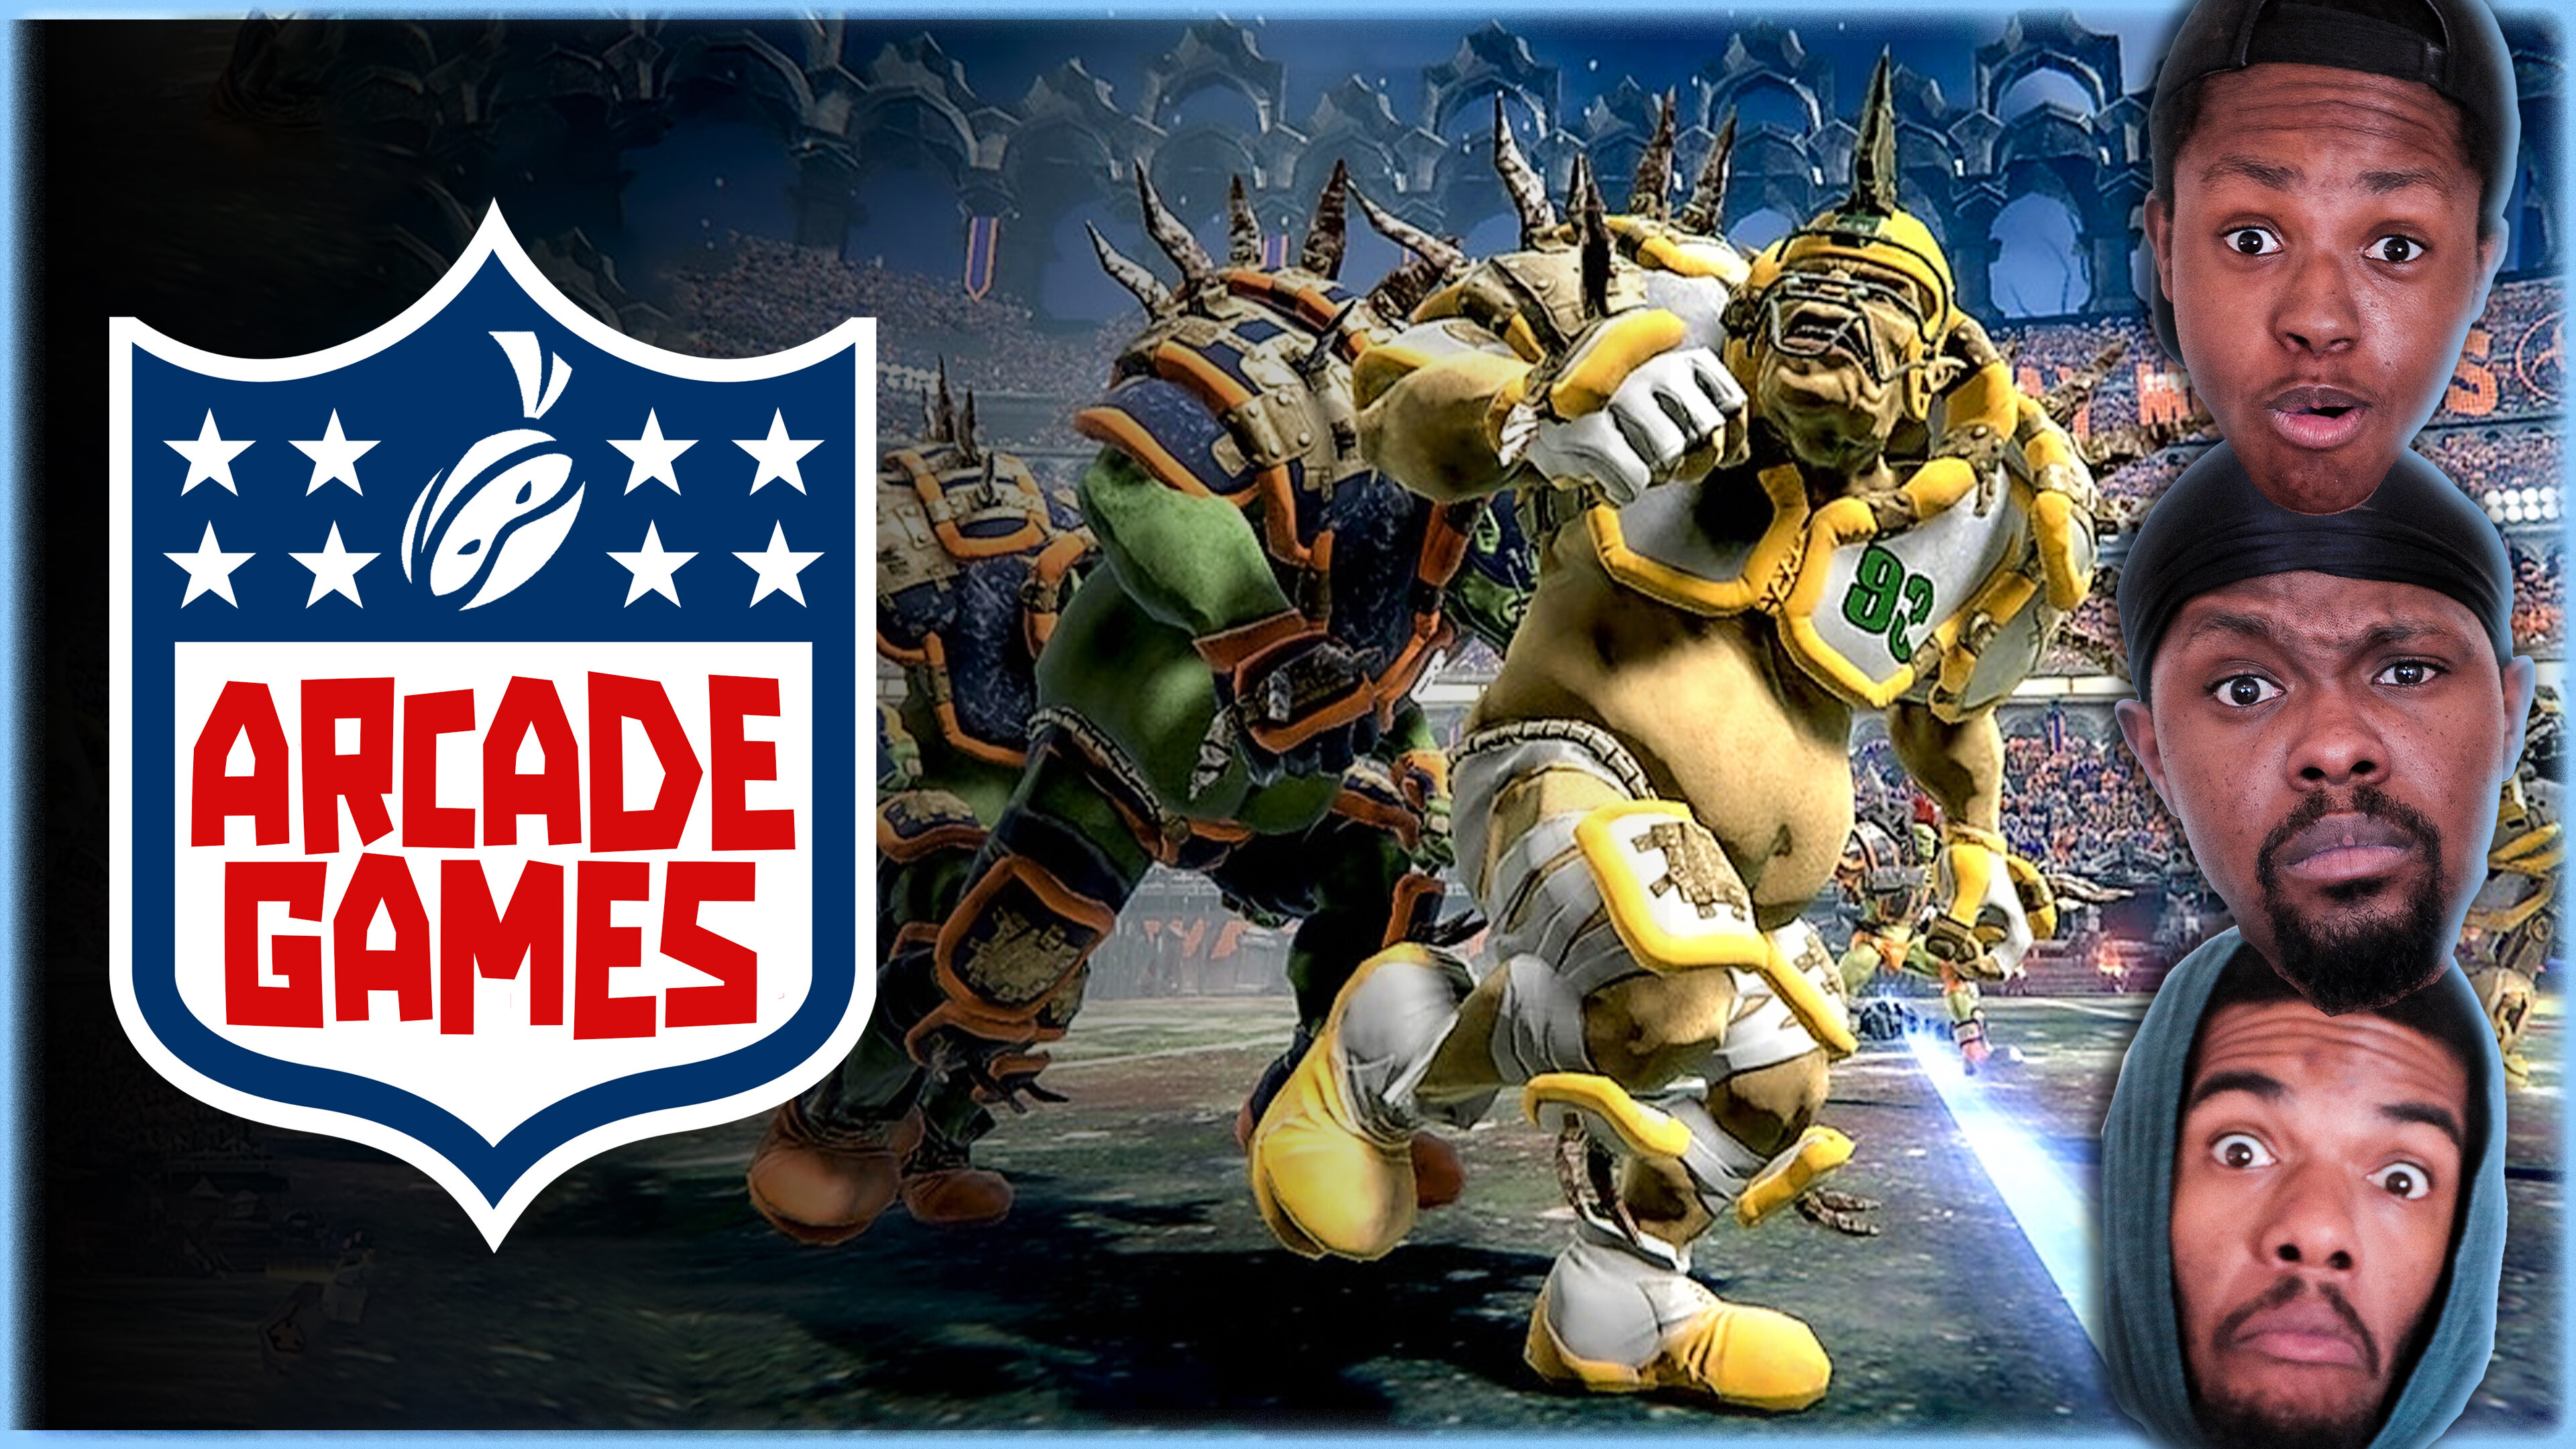 NFL Arcade Games